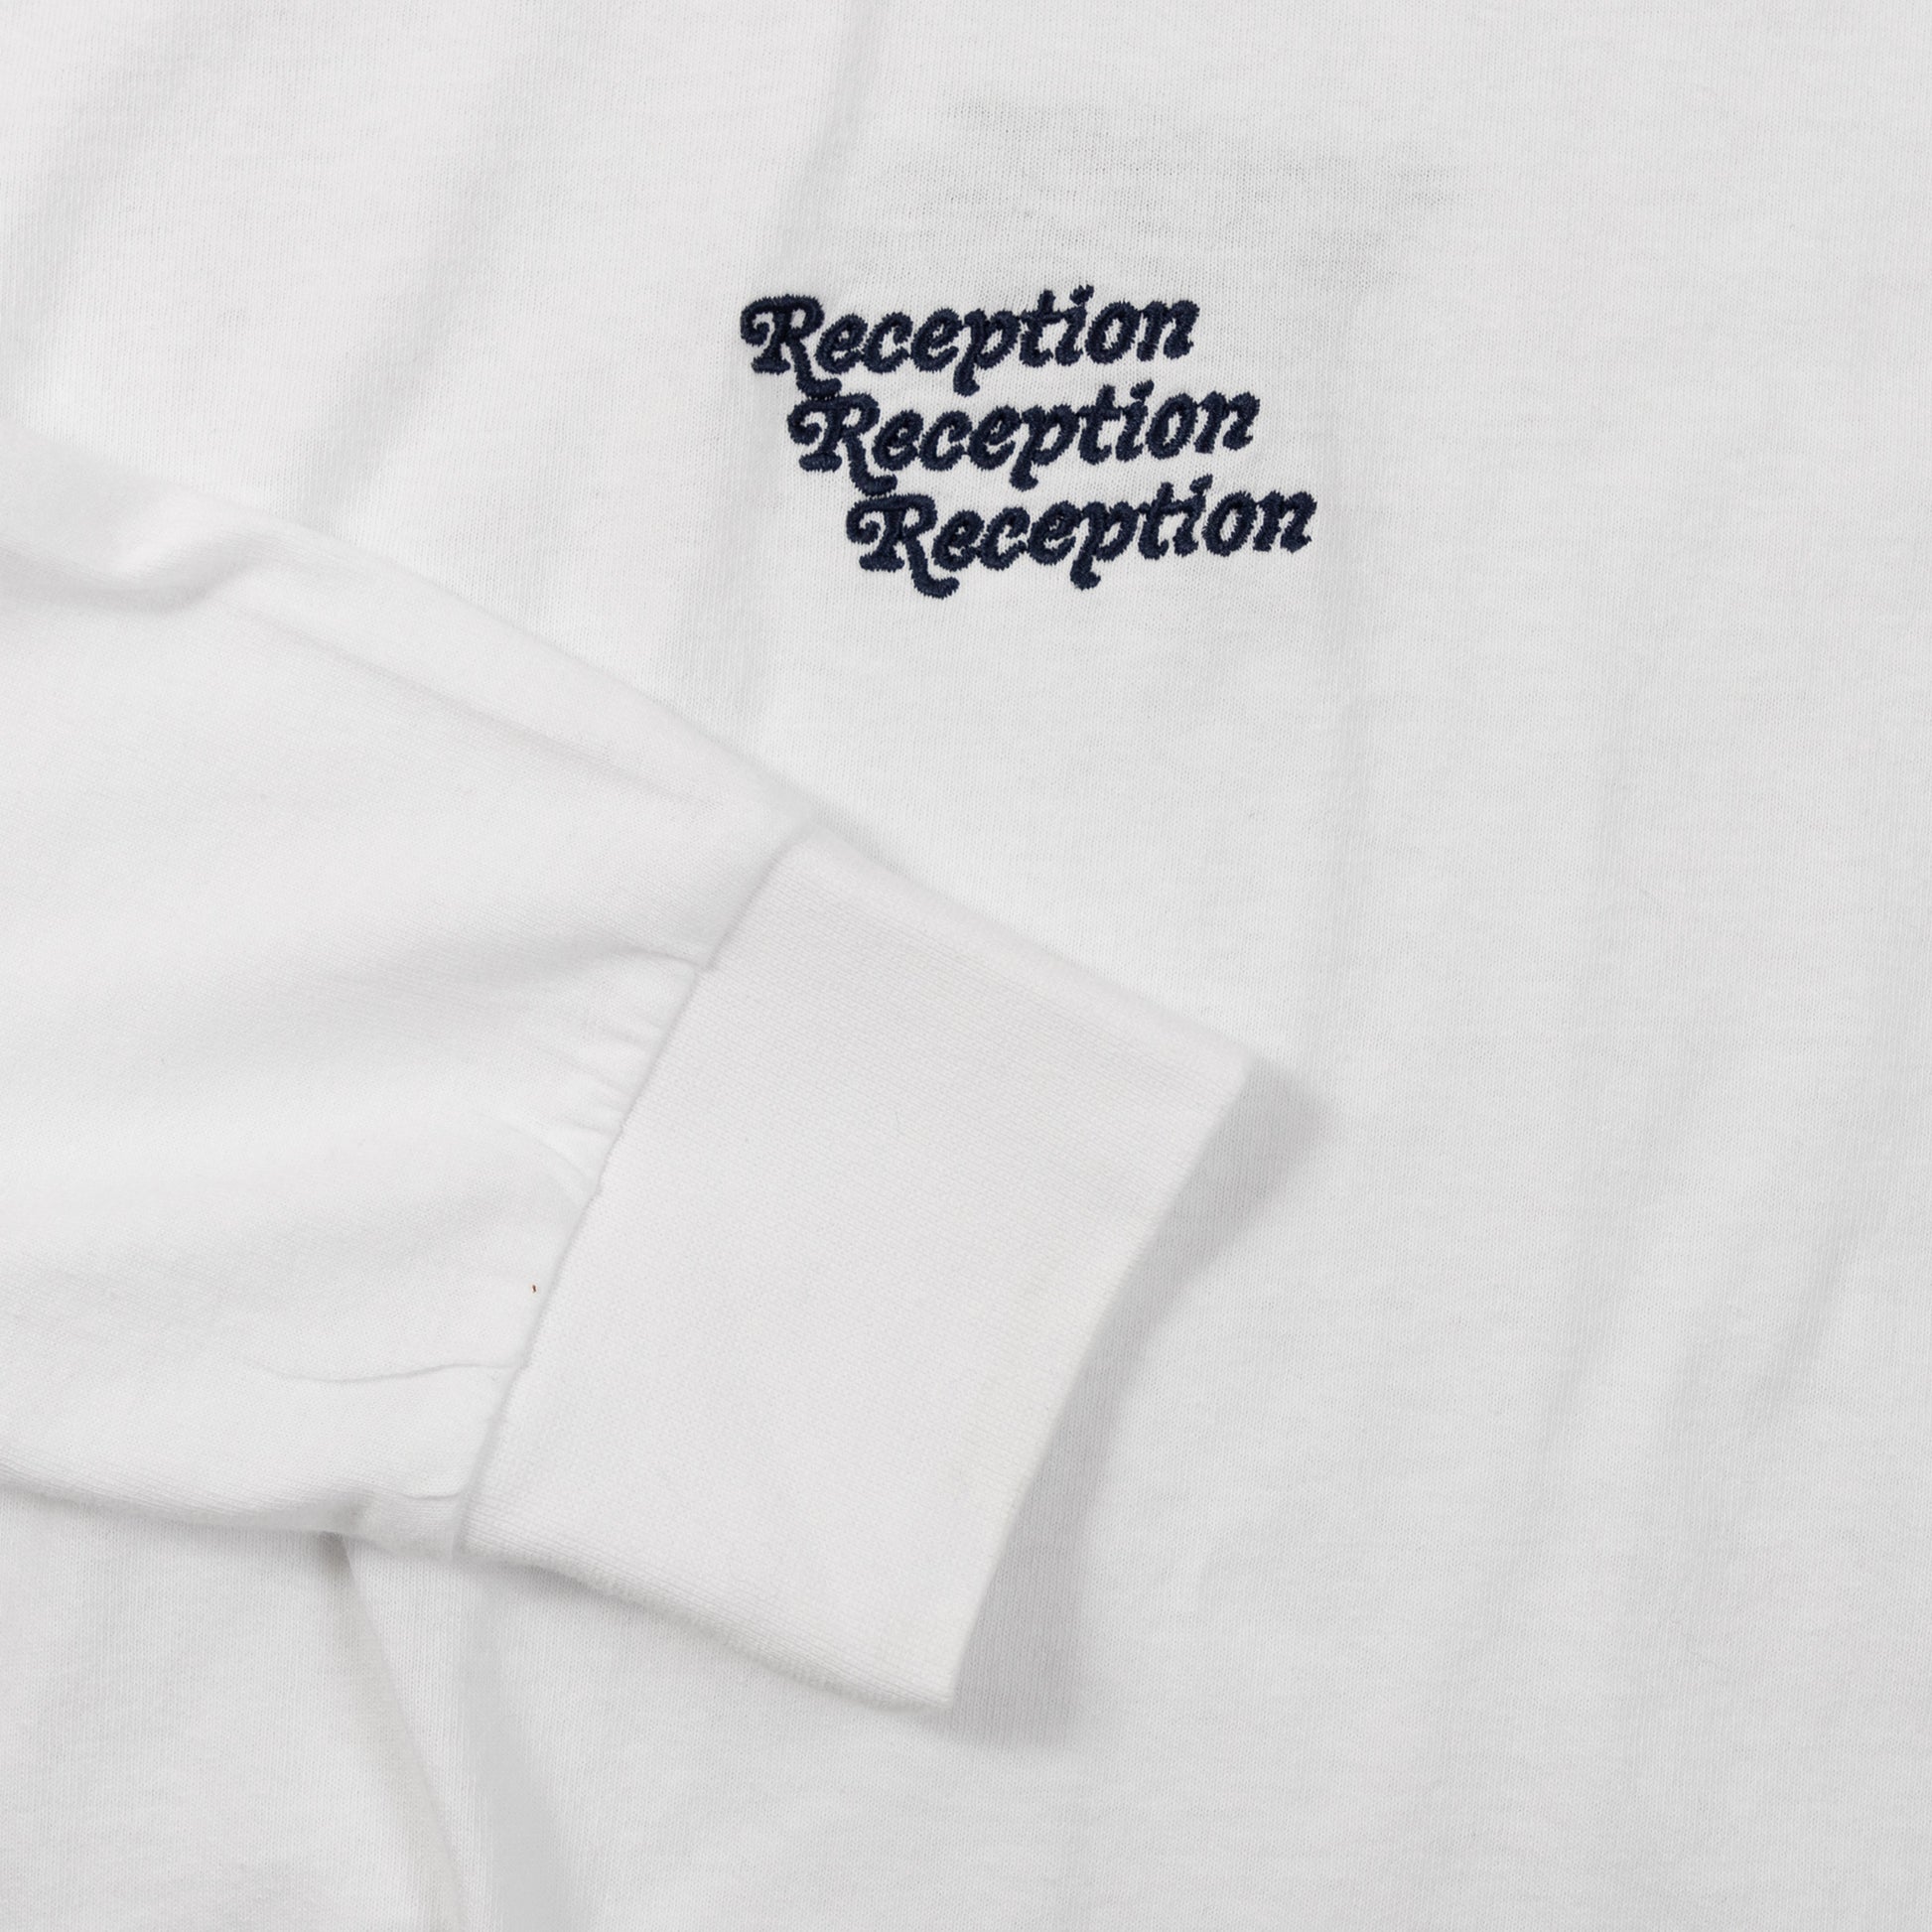 Reception SC Long Sleeve Shirt Irony LS Tee White Cuff